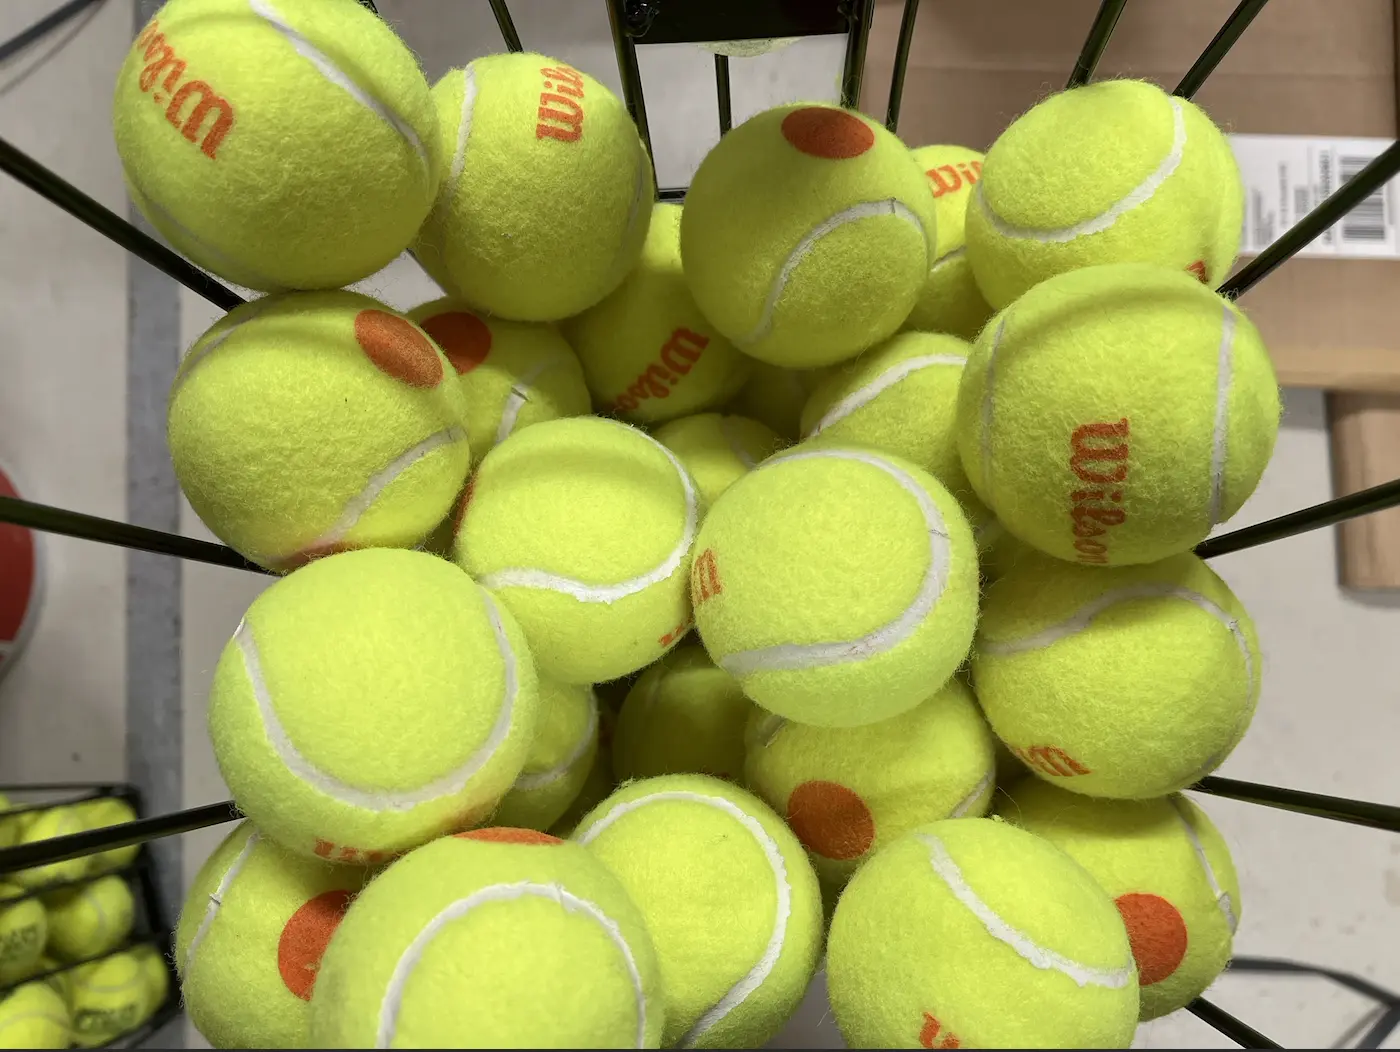 How to Choose a Tennis Ball